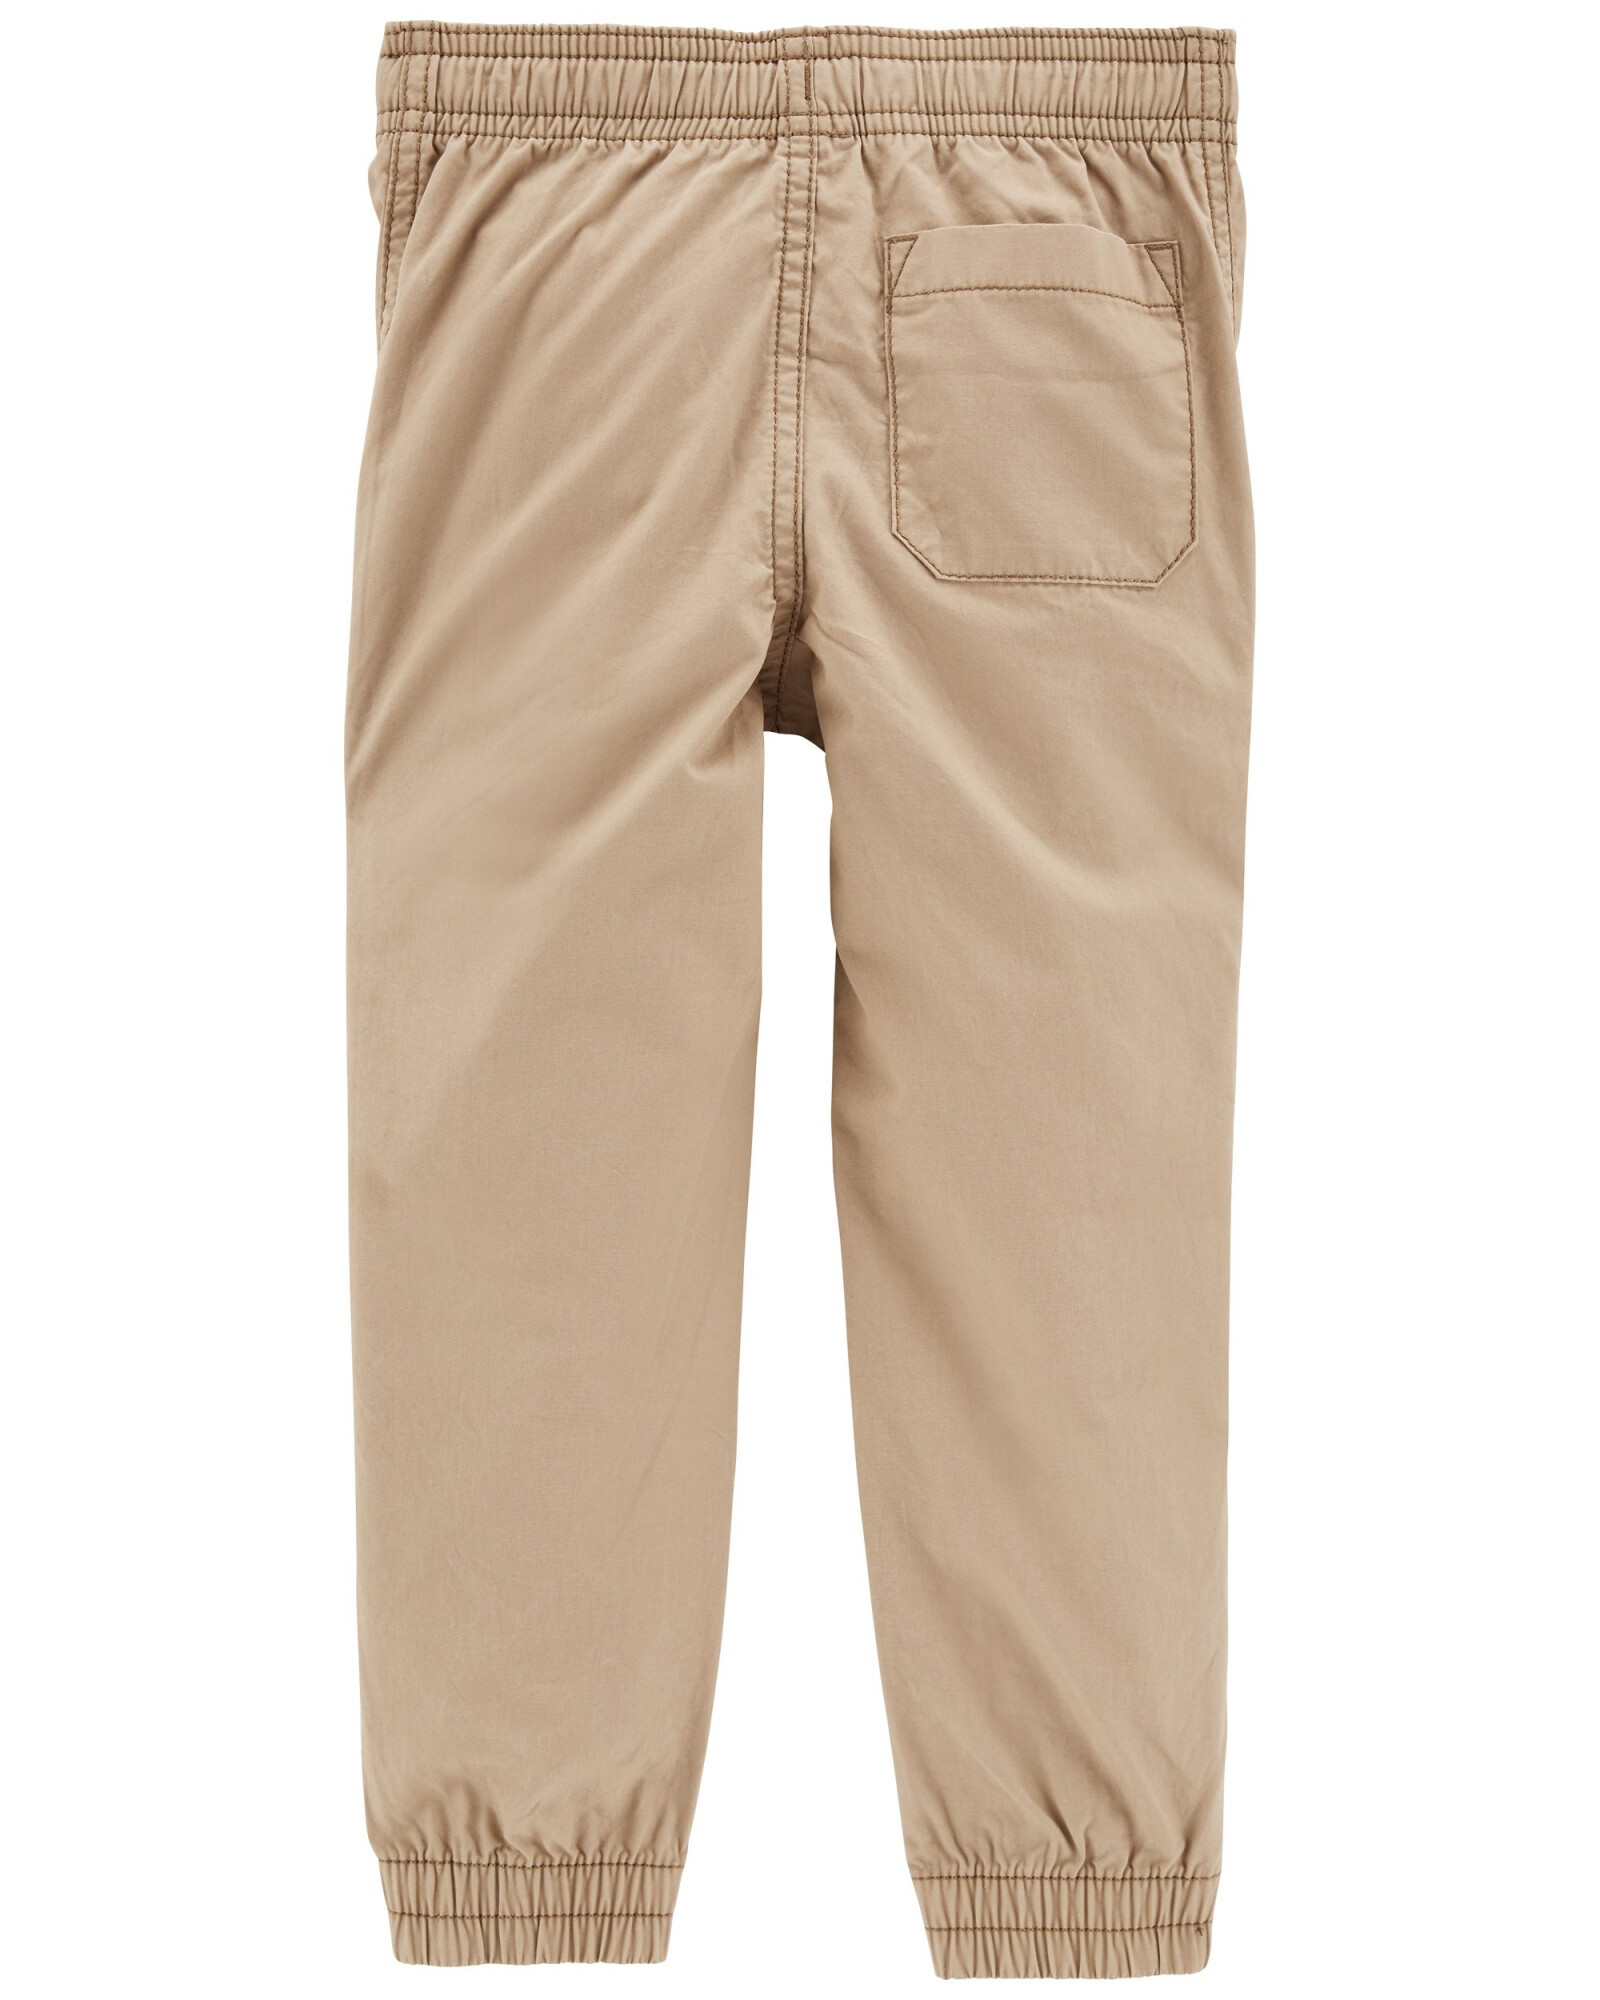 Pantalón de popelina, khaki. Talles 2-5T Sin color